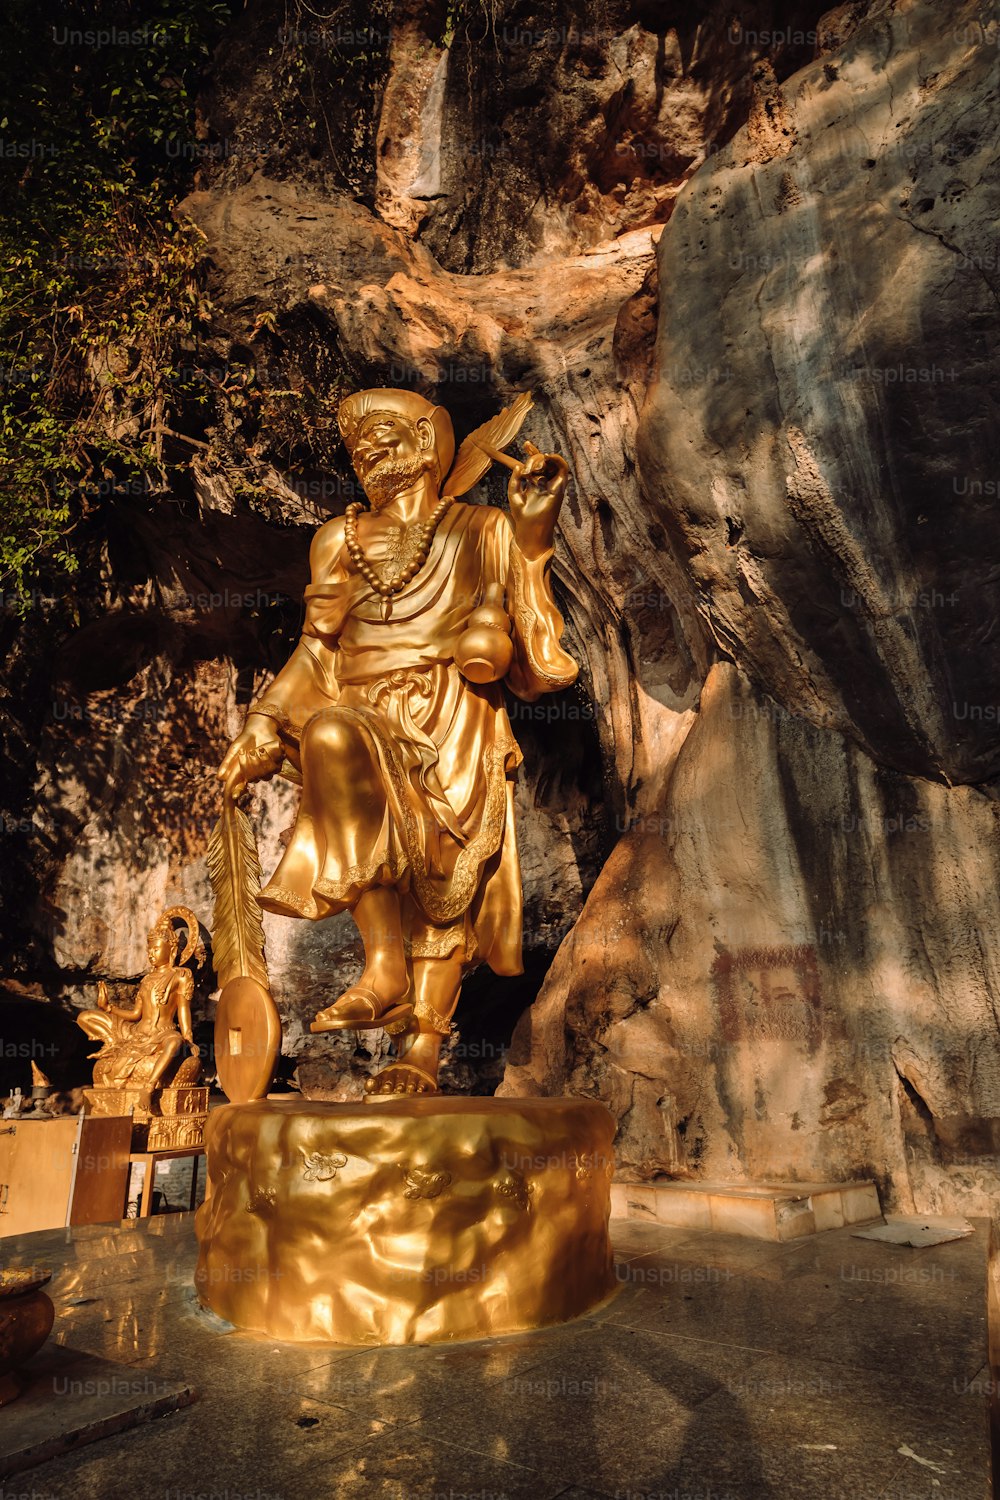 Una estatua dorada de un hombre sosteniendo una espada